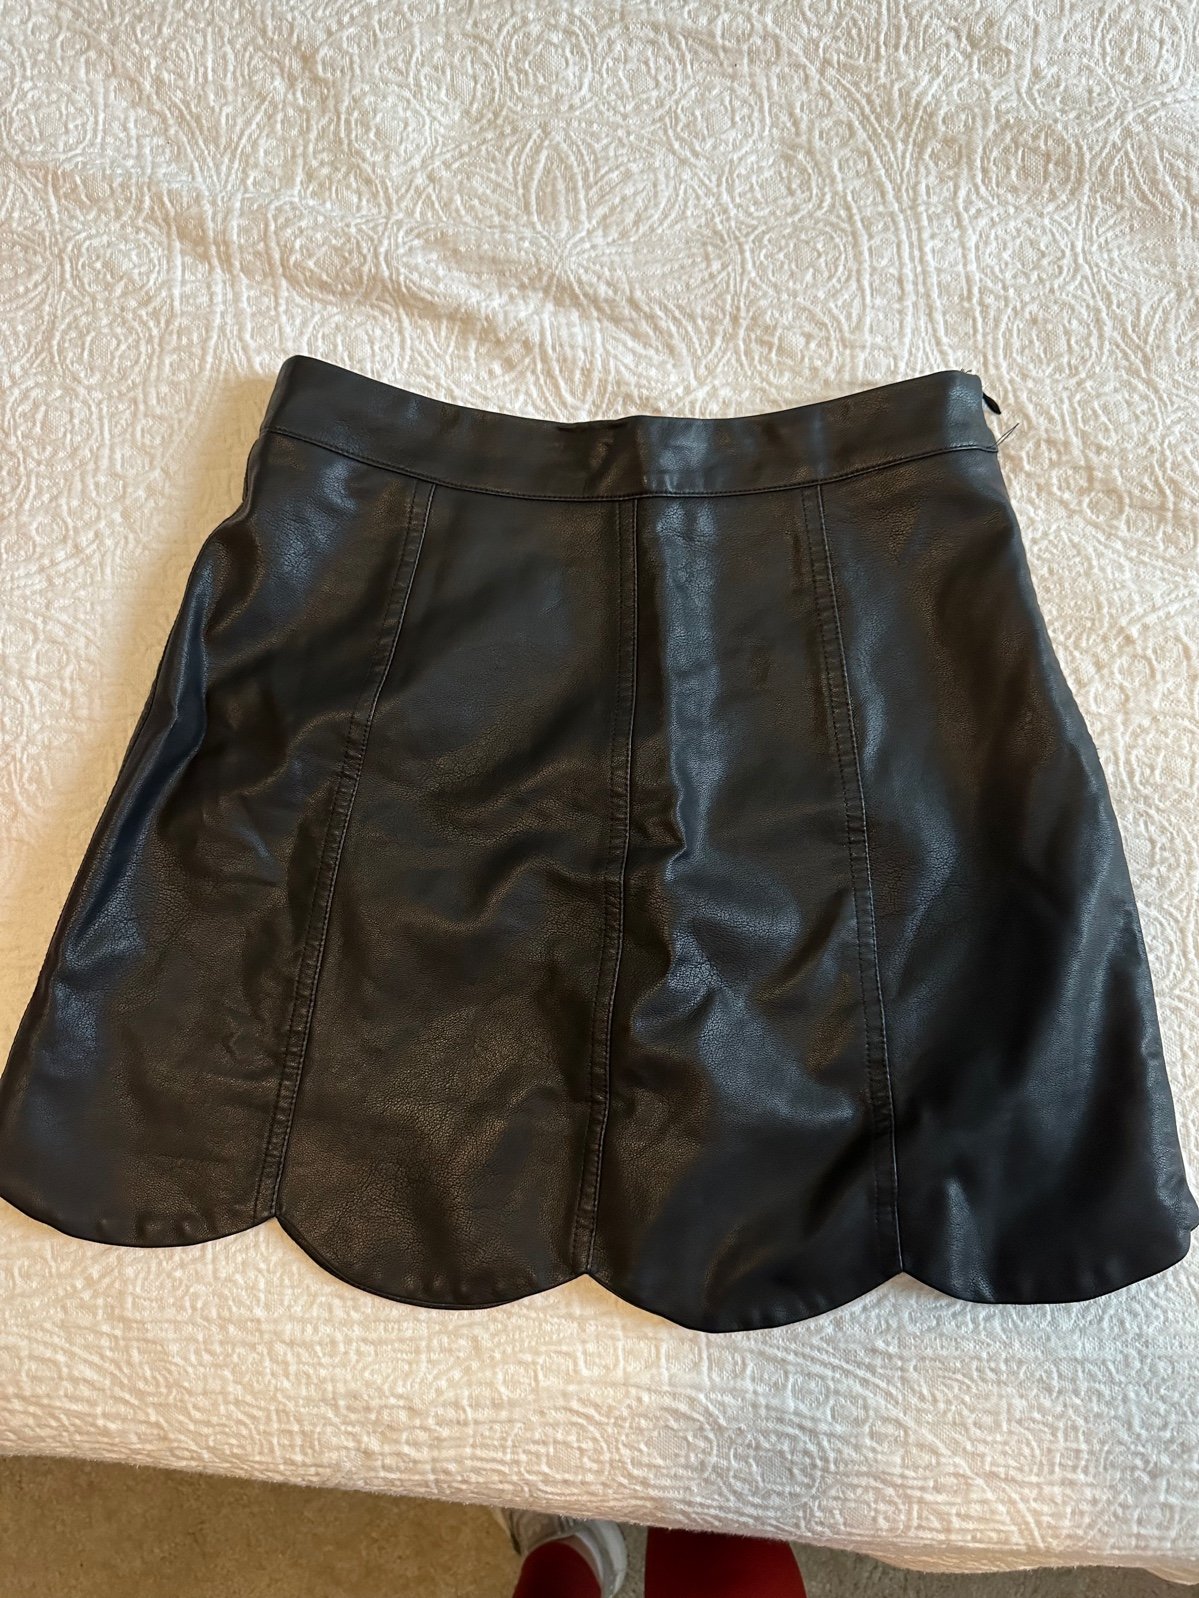 the Lowest price Black Faux Leather Scalloped Mini Skirt hTZC4XvlZ Hot Sale